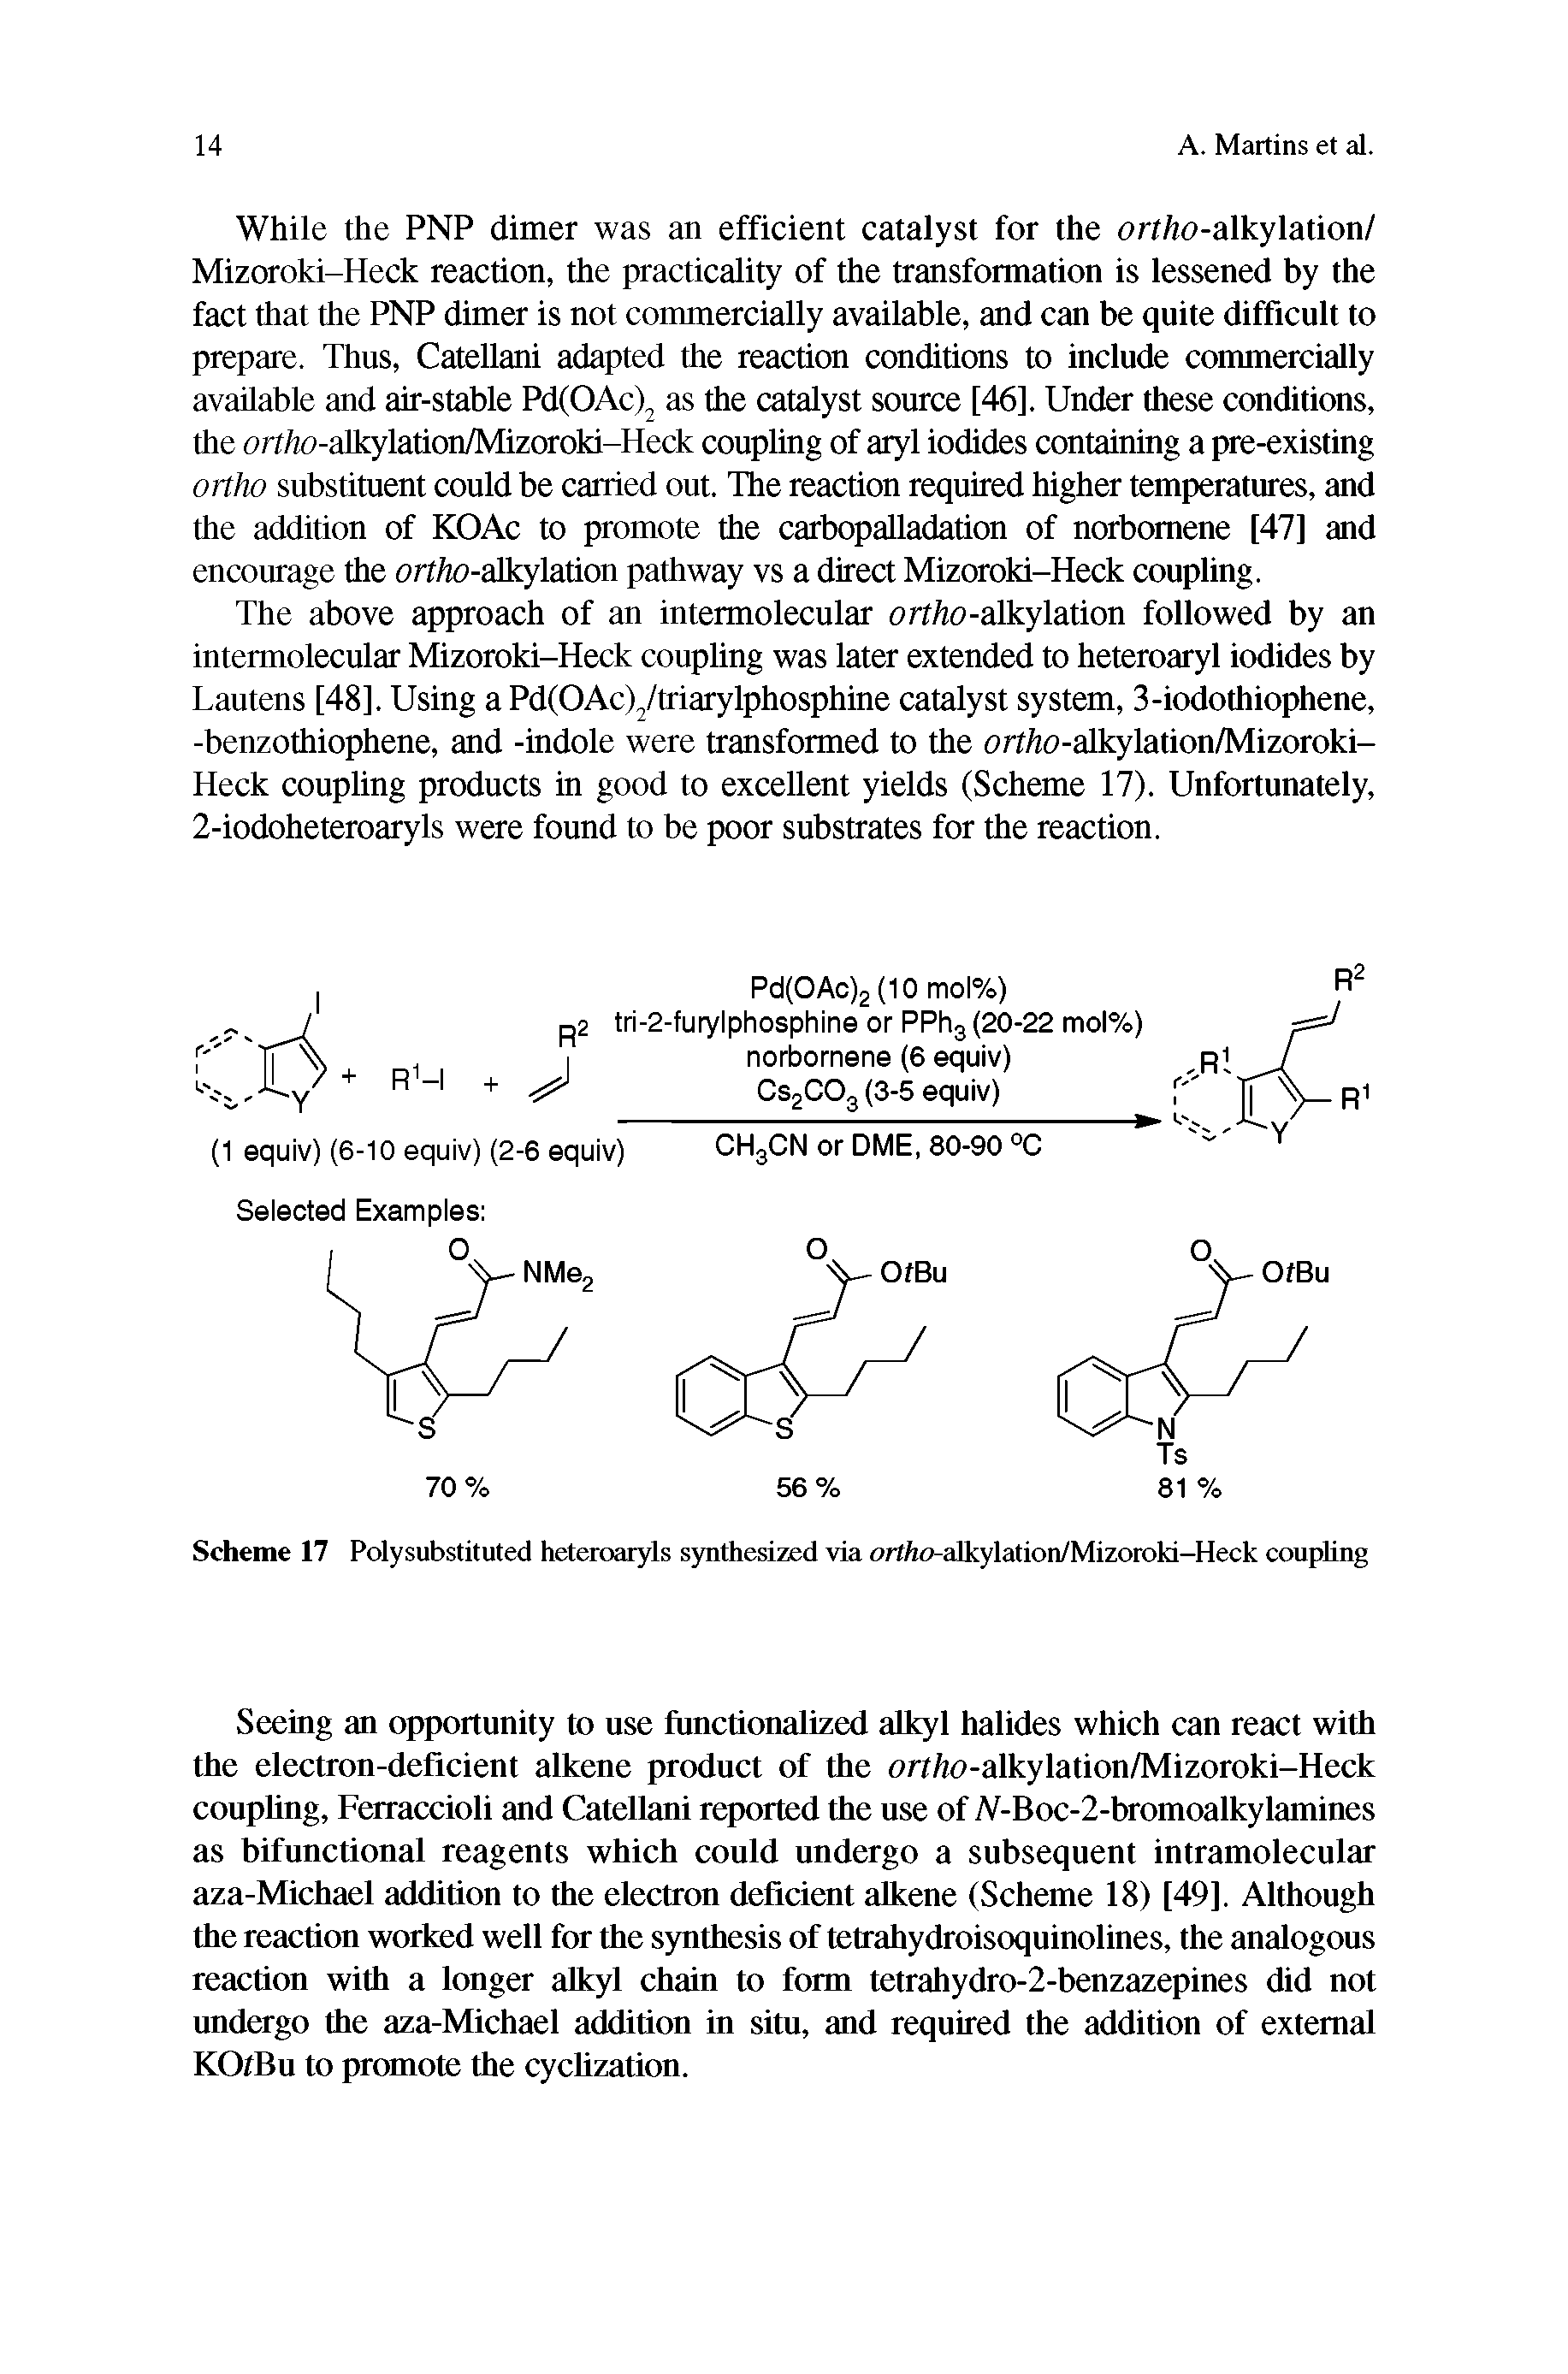 Scheme 17 Polysubstituted heteroaryls synthesized via ortho-alkylation/Mizoroki-Heck coupling...